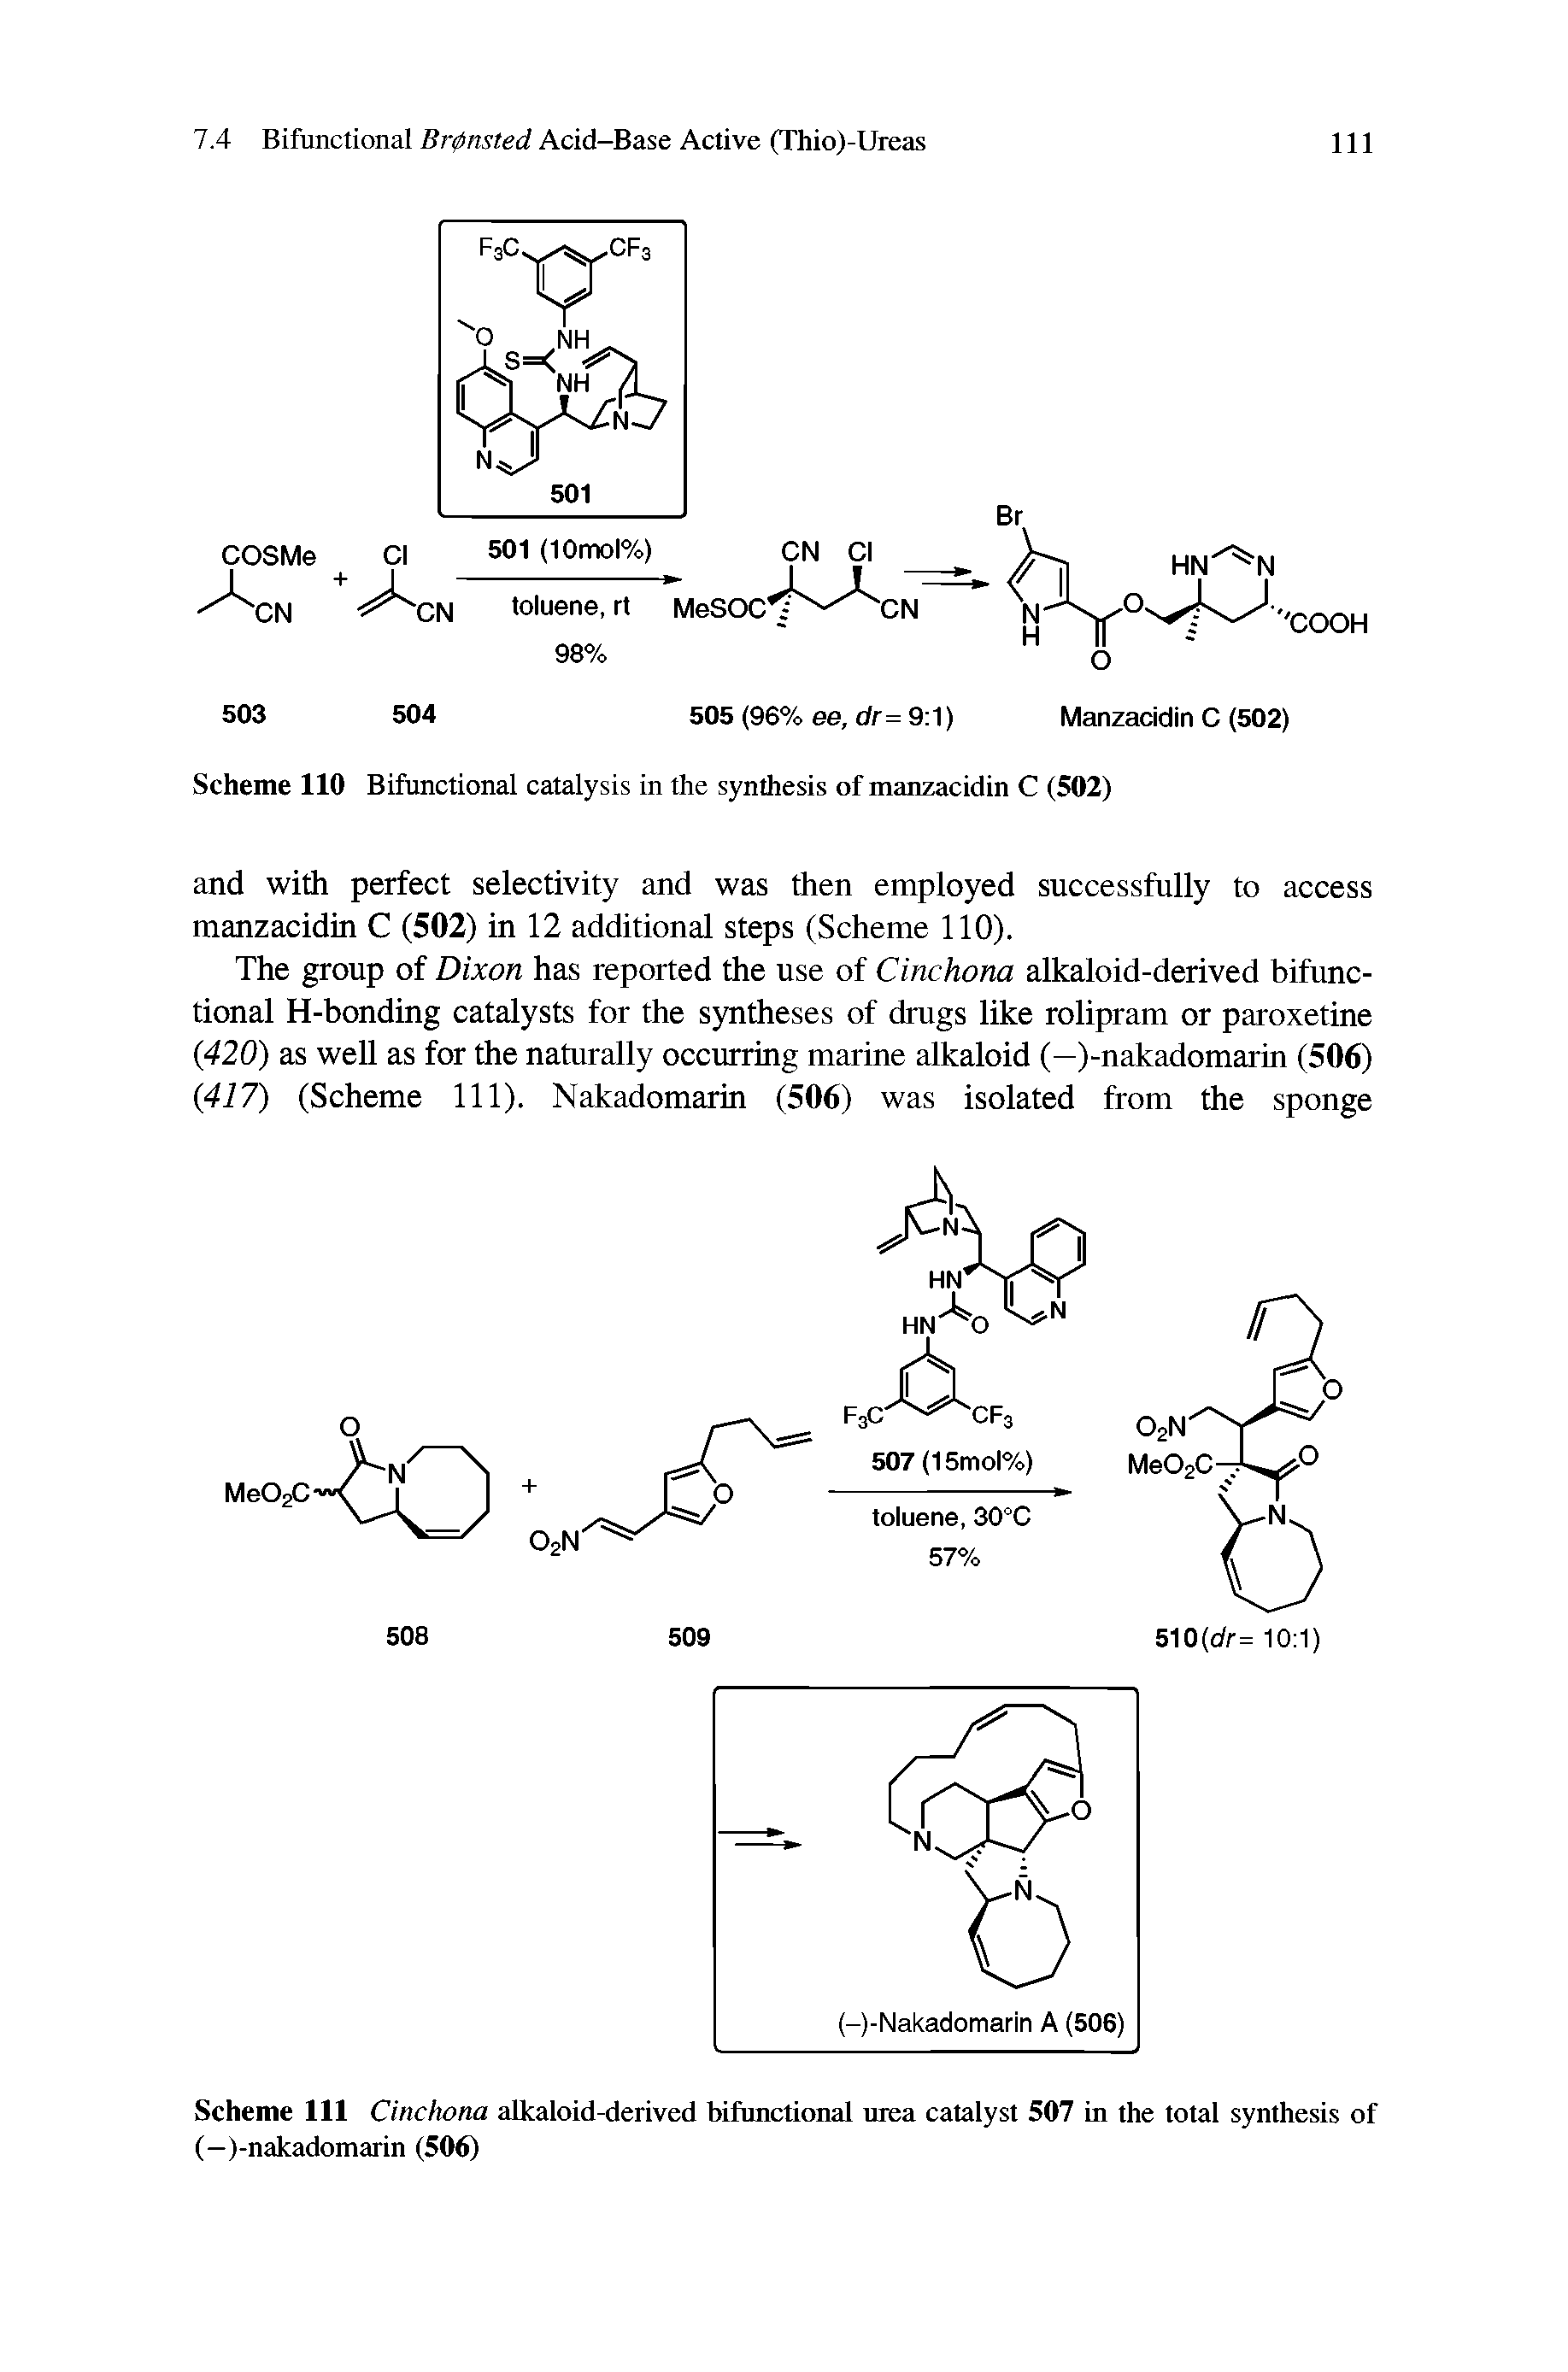 Scheme 111 Cinchona alkaloid-derived bifunctional urea catalyst 507 in the total synthesis of (-)-nakadomarin (506)...